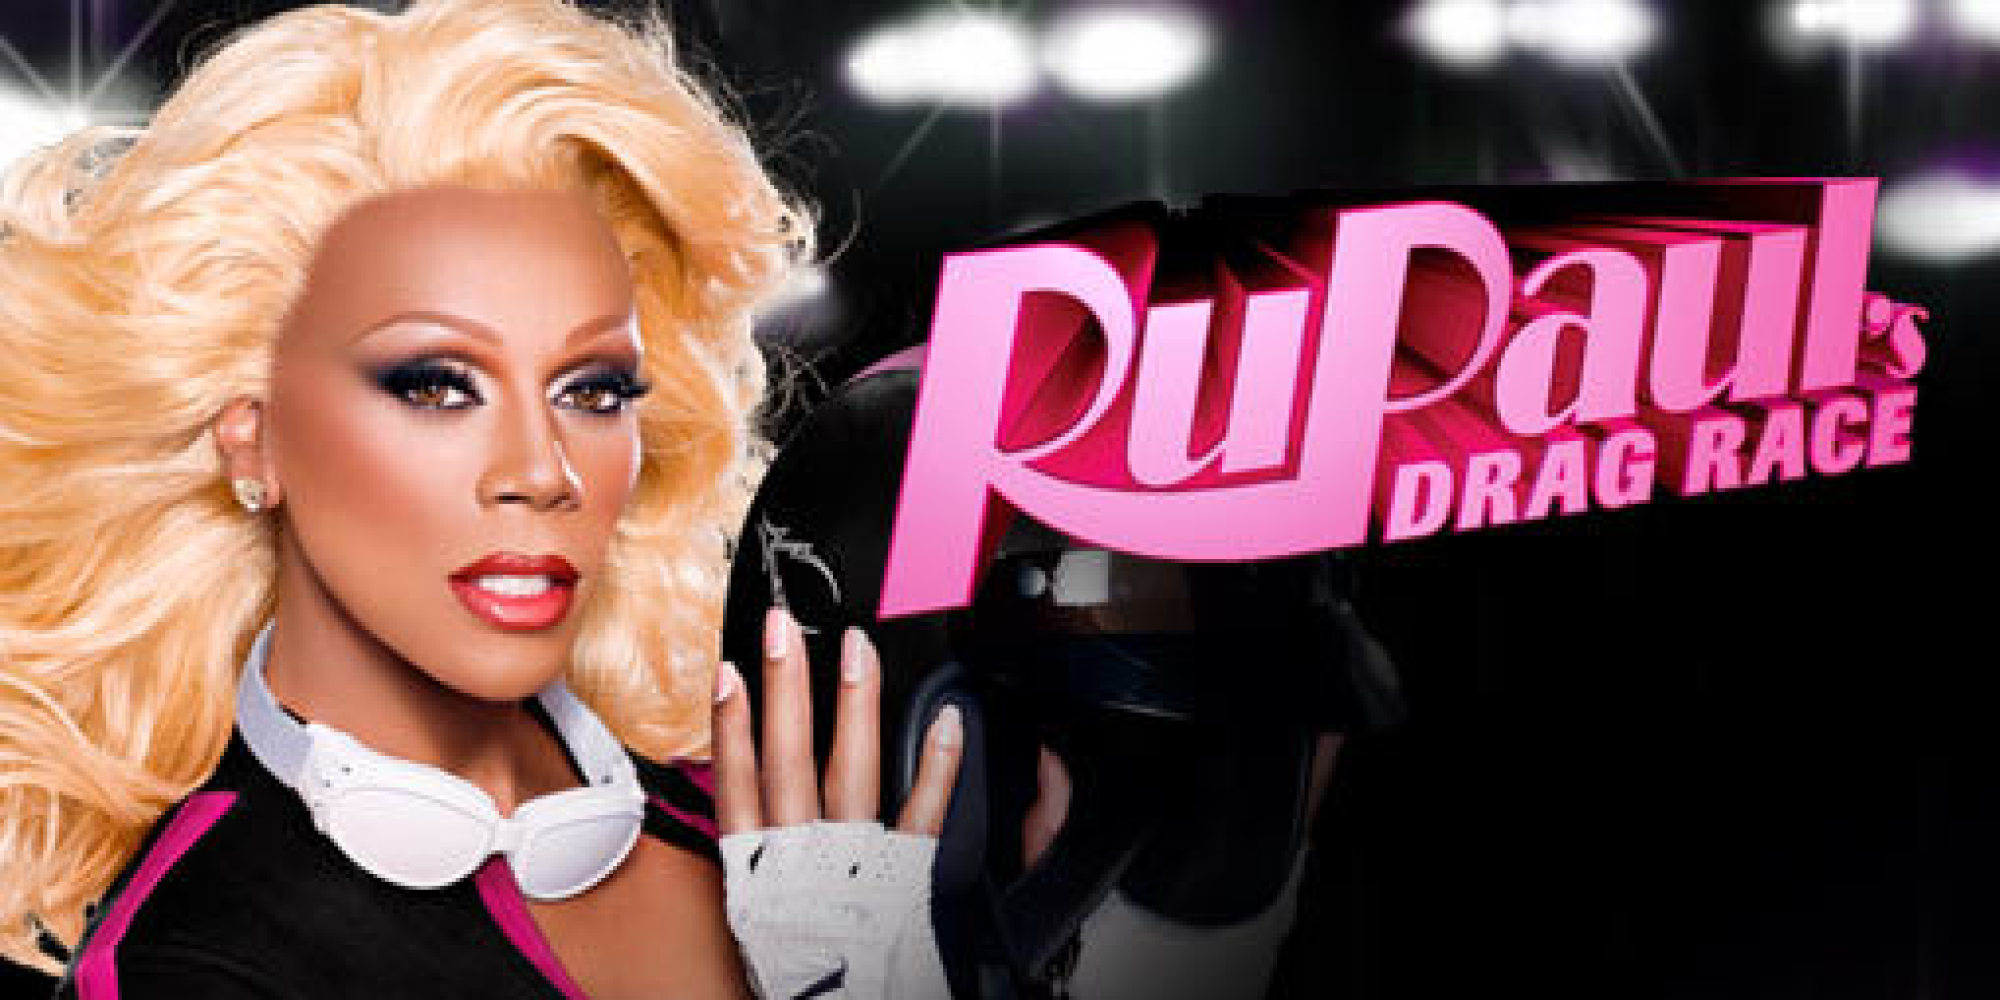 RuPaul's Drag Race - TV Series